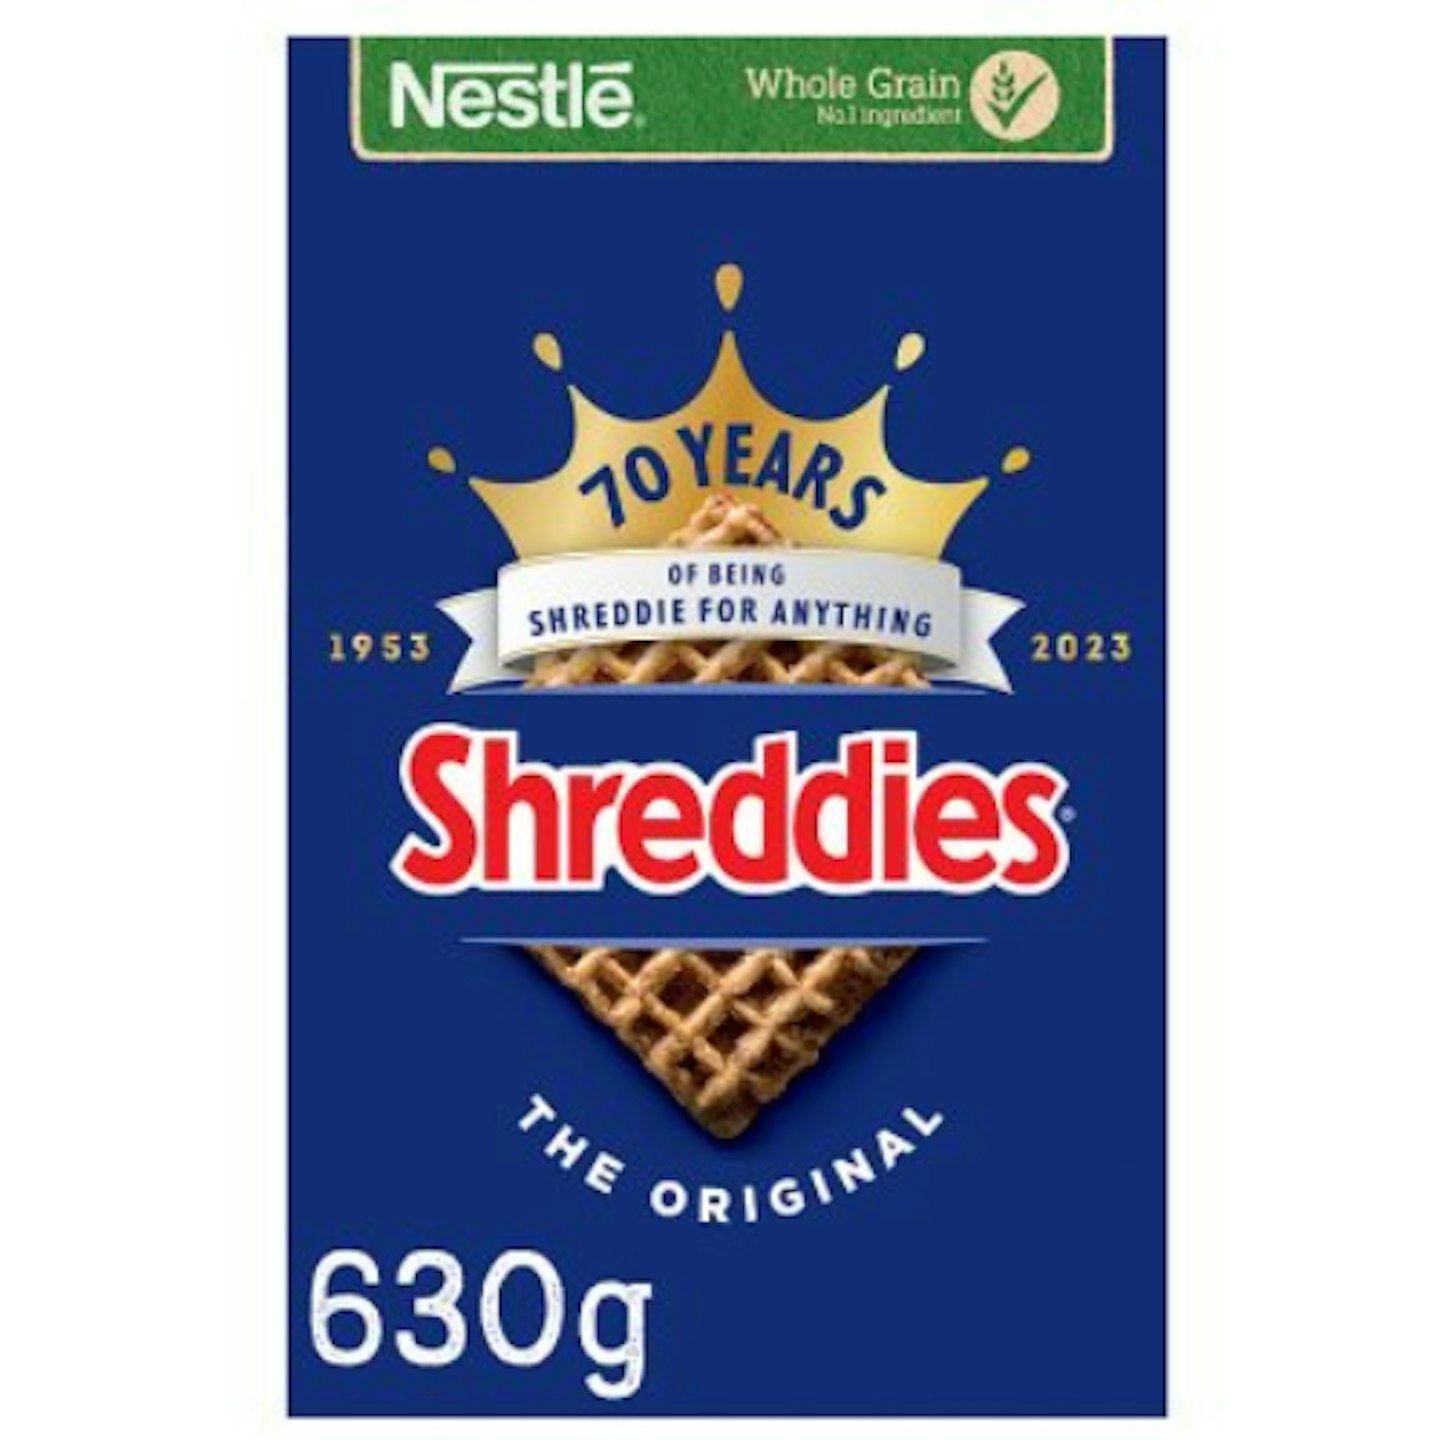 Shreddies The Original - 630g